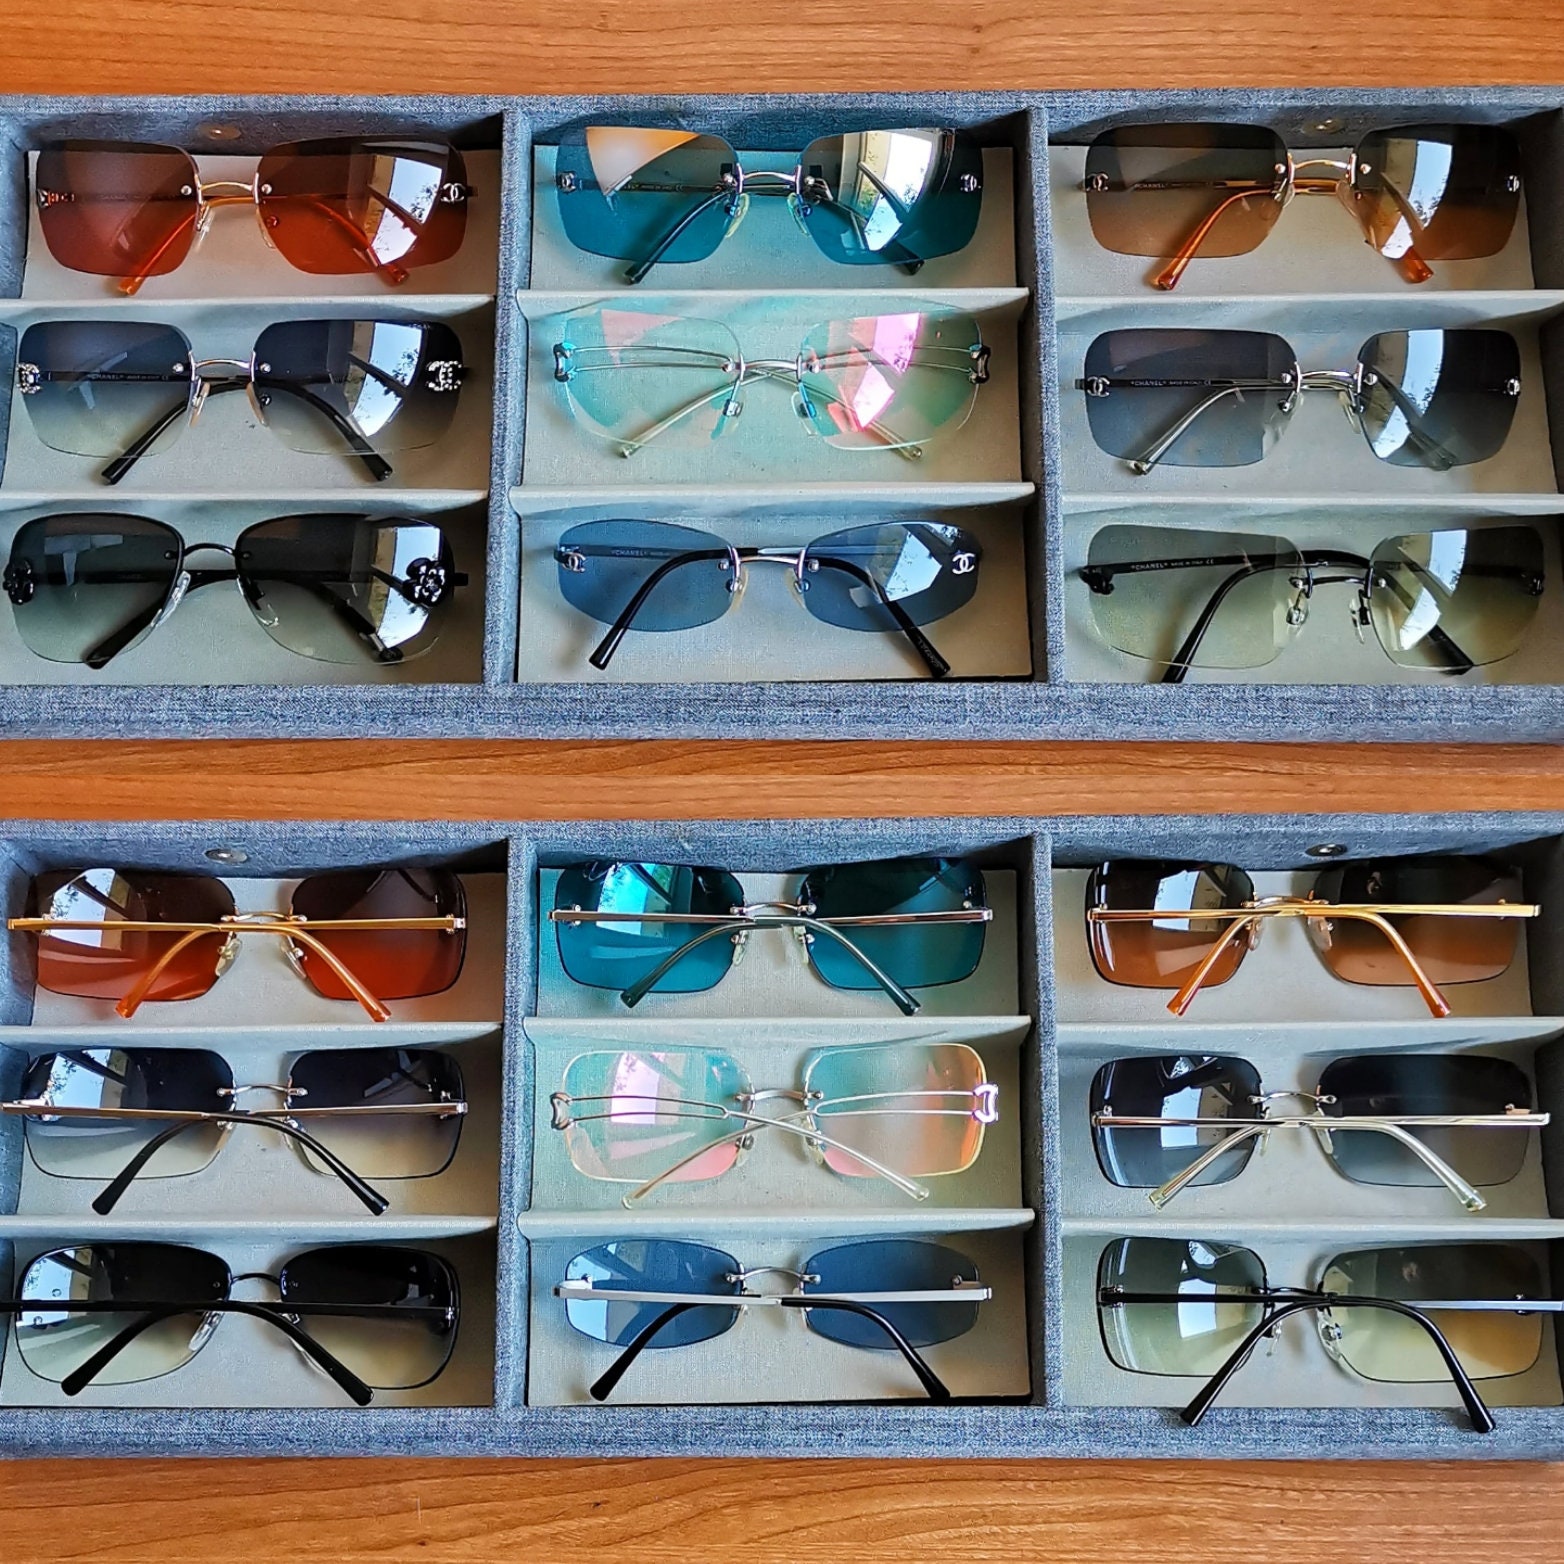 CHANEL, Accessories, Chanel Cat Eye Vintage Sun Glasses